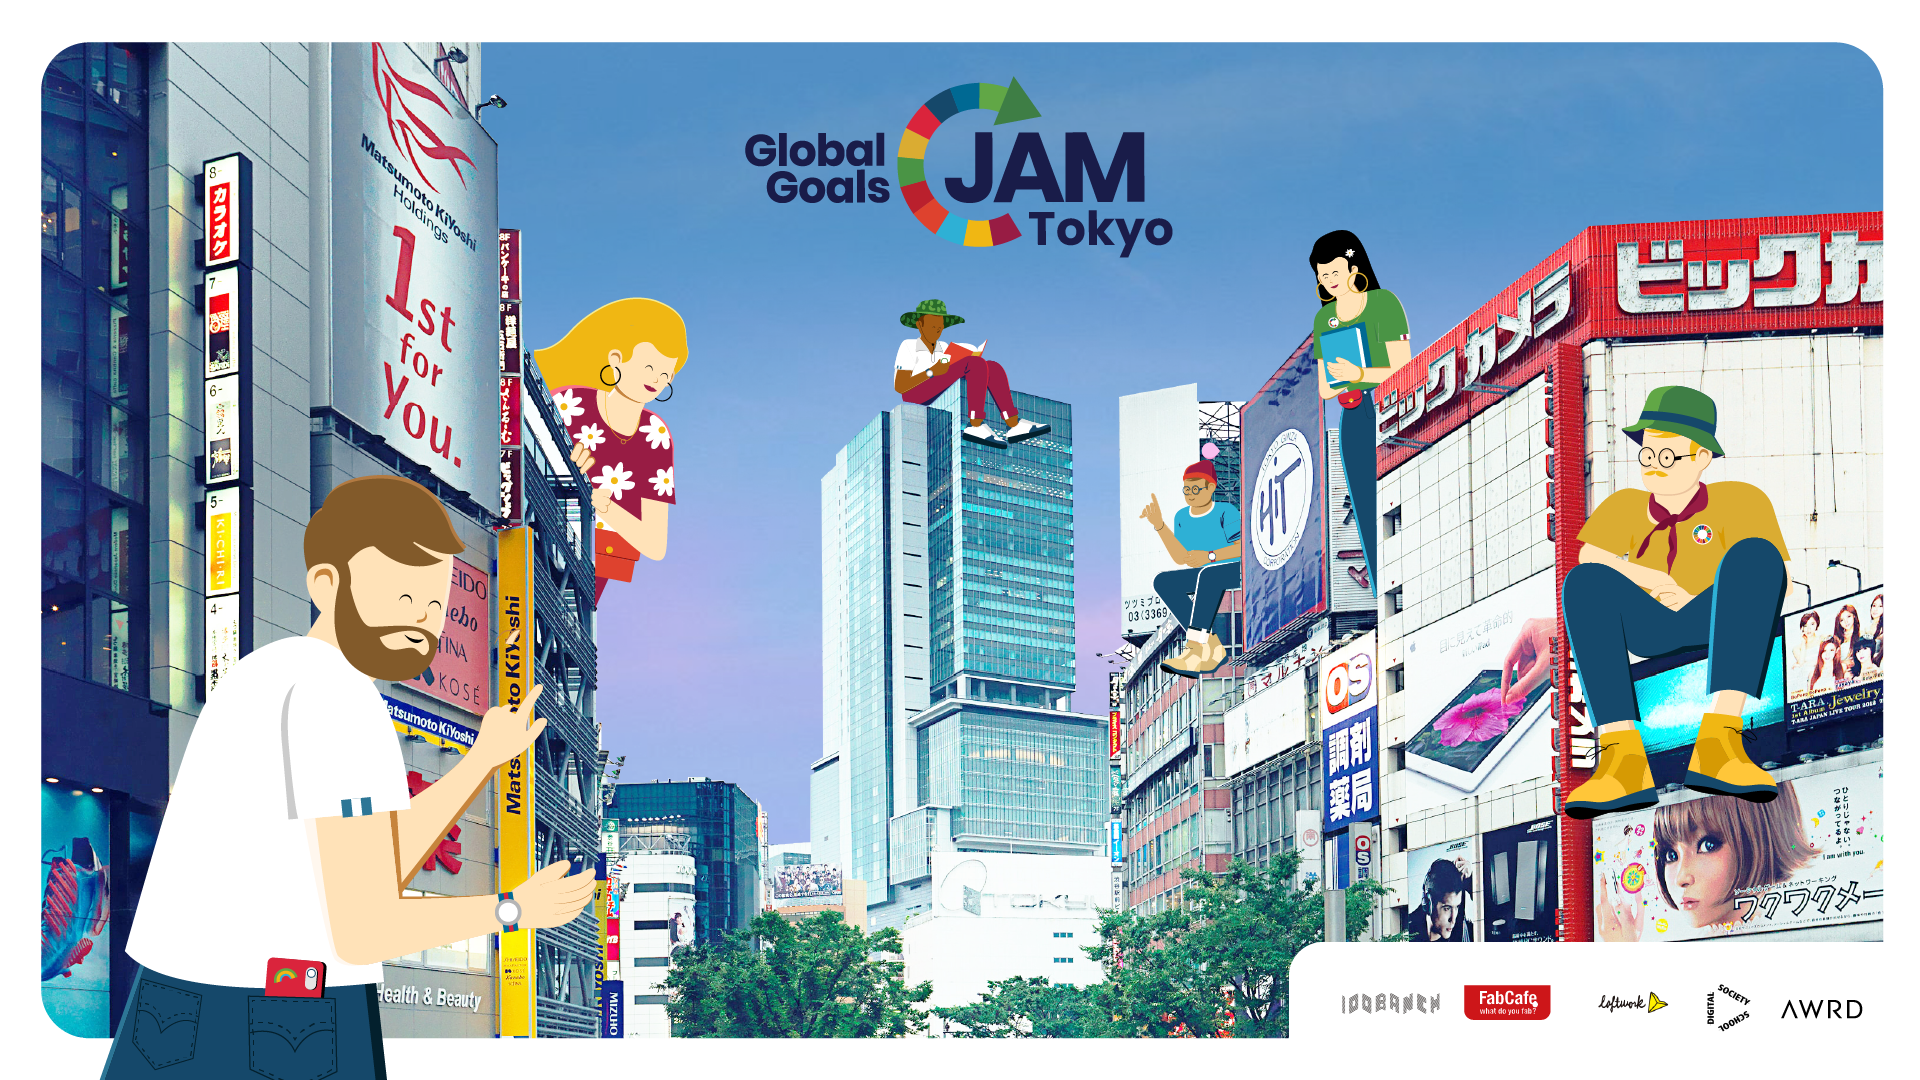 global goals jam